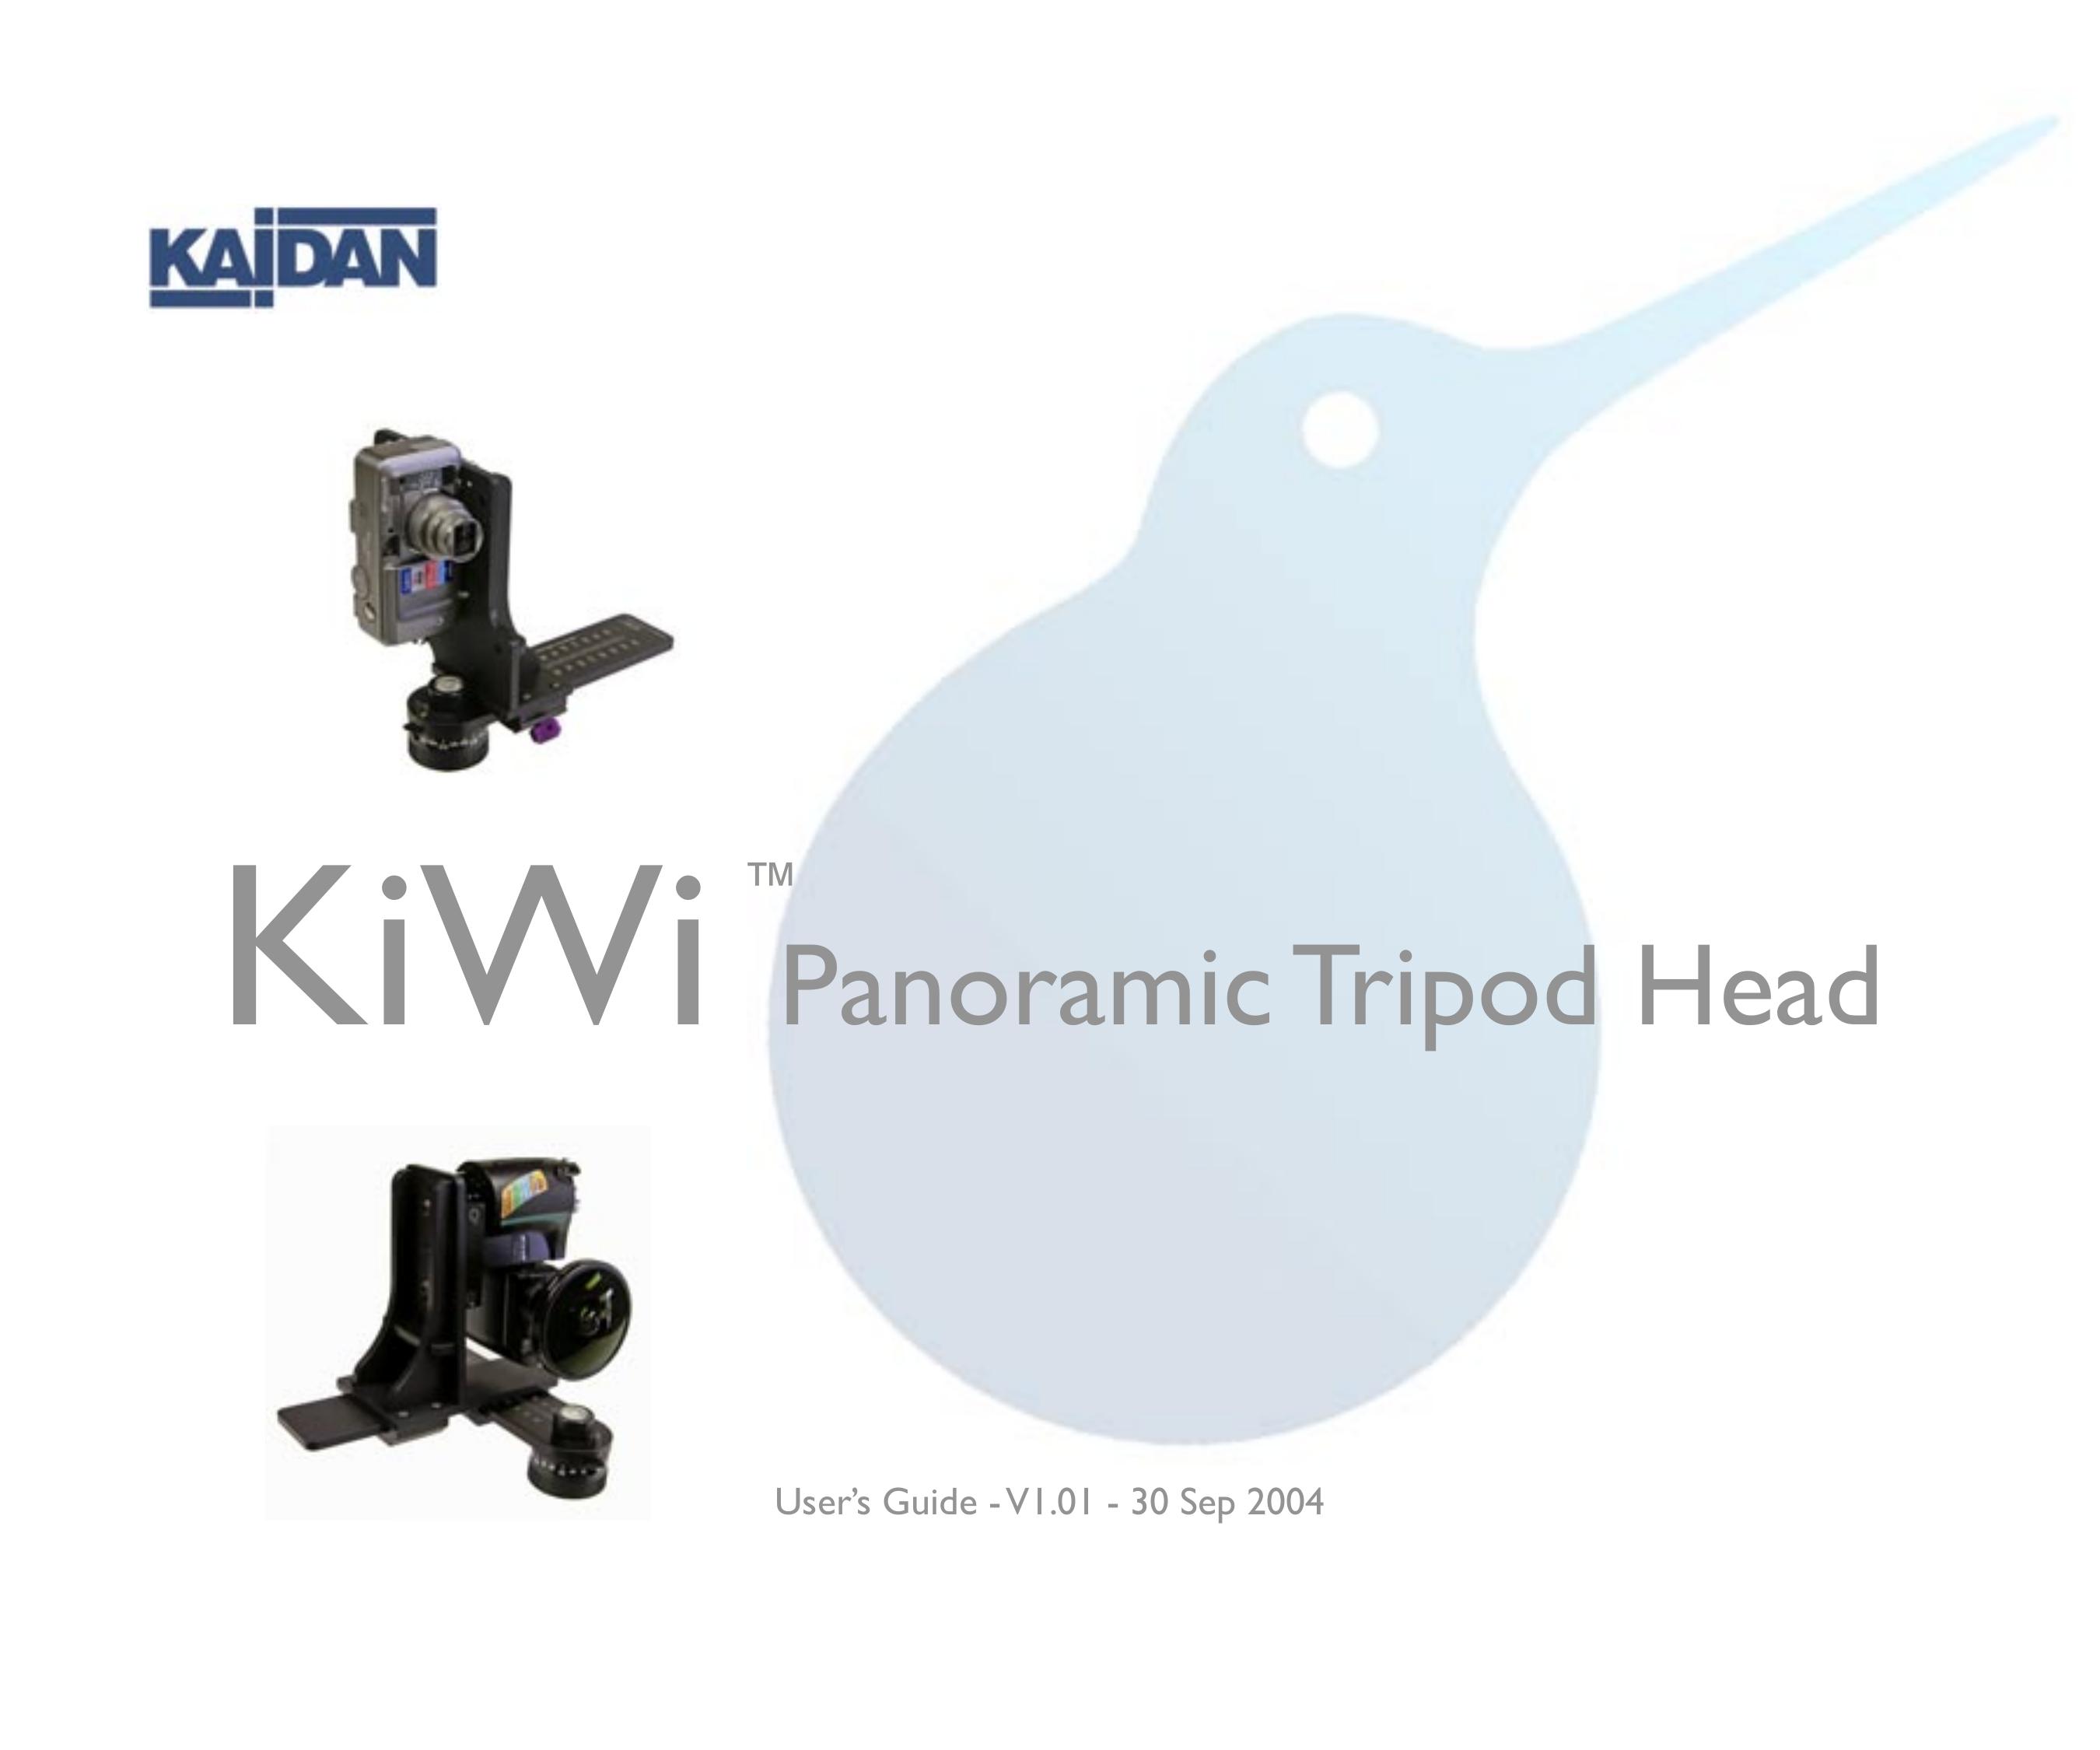 Kaidan KiWi Panoramic Tripod Head Camera Accessories User Manual